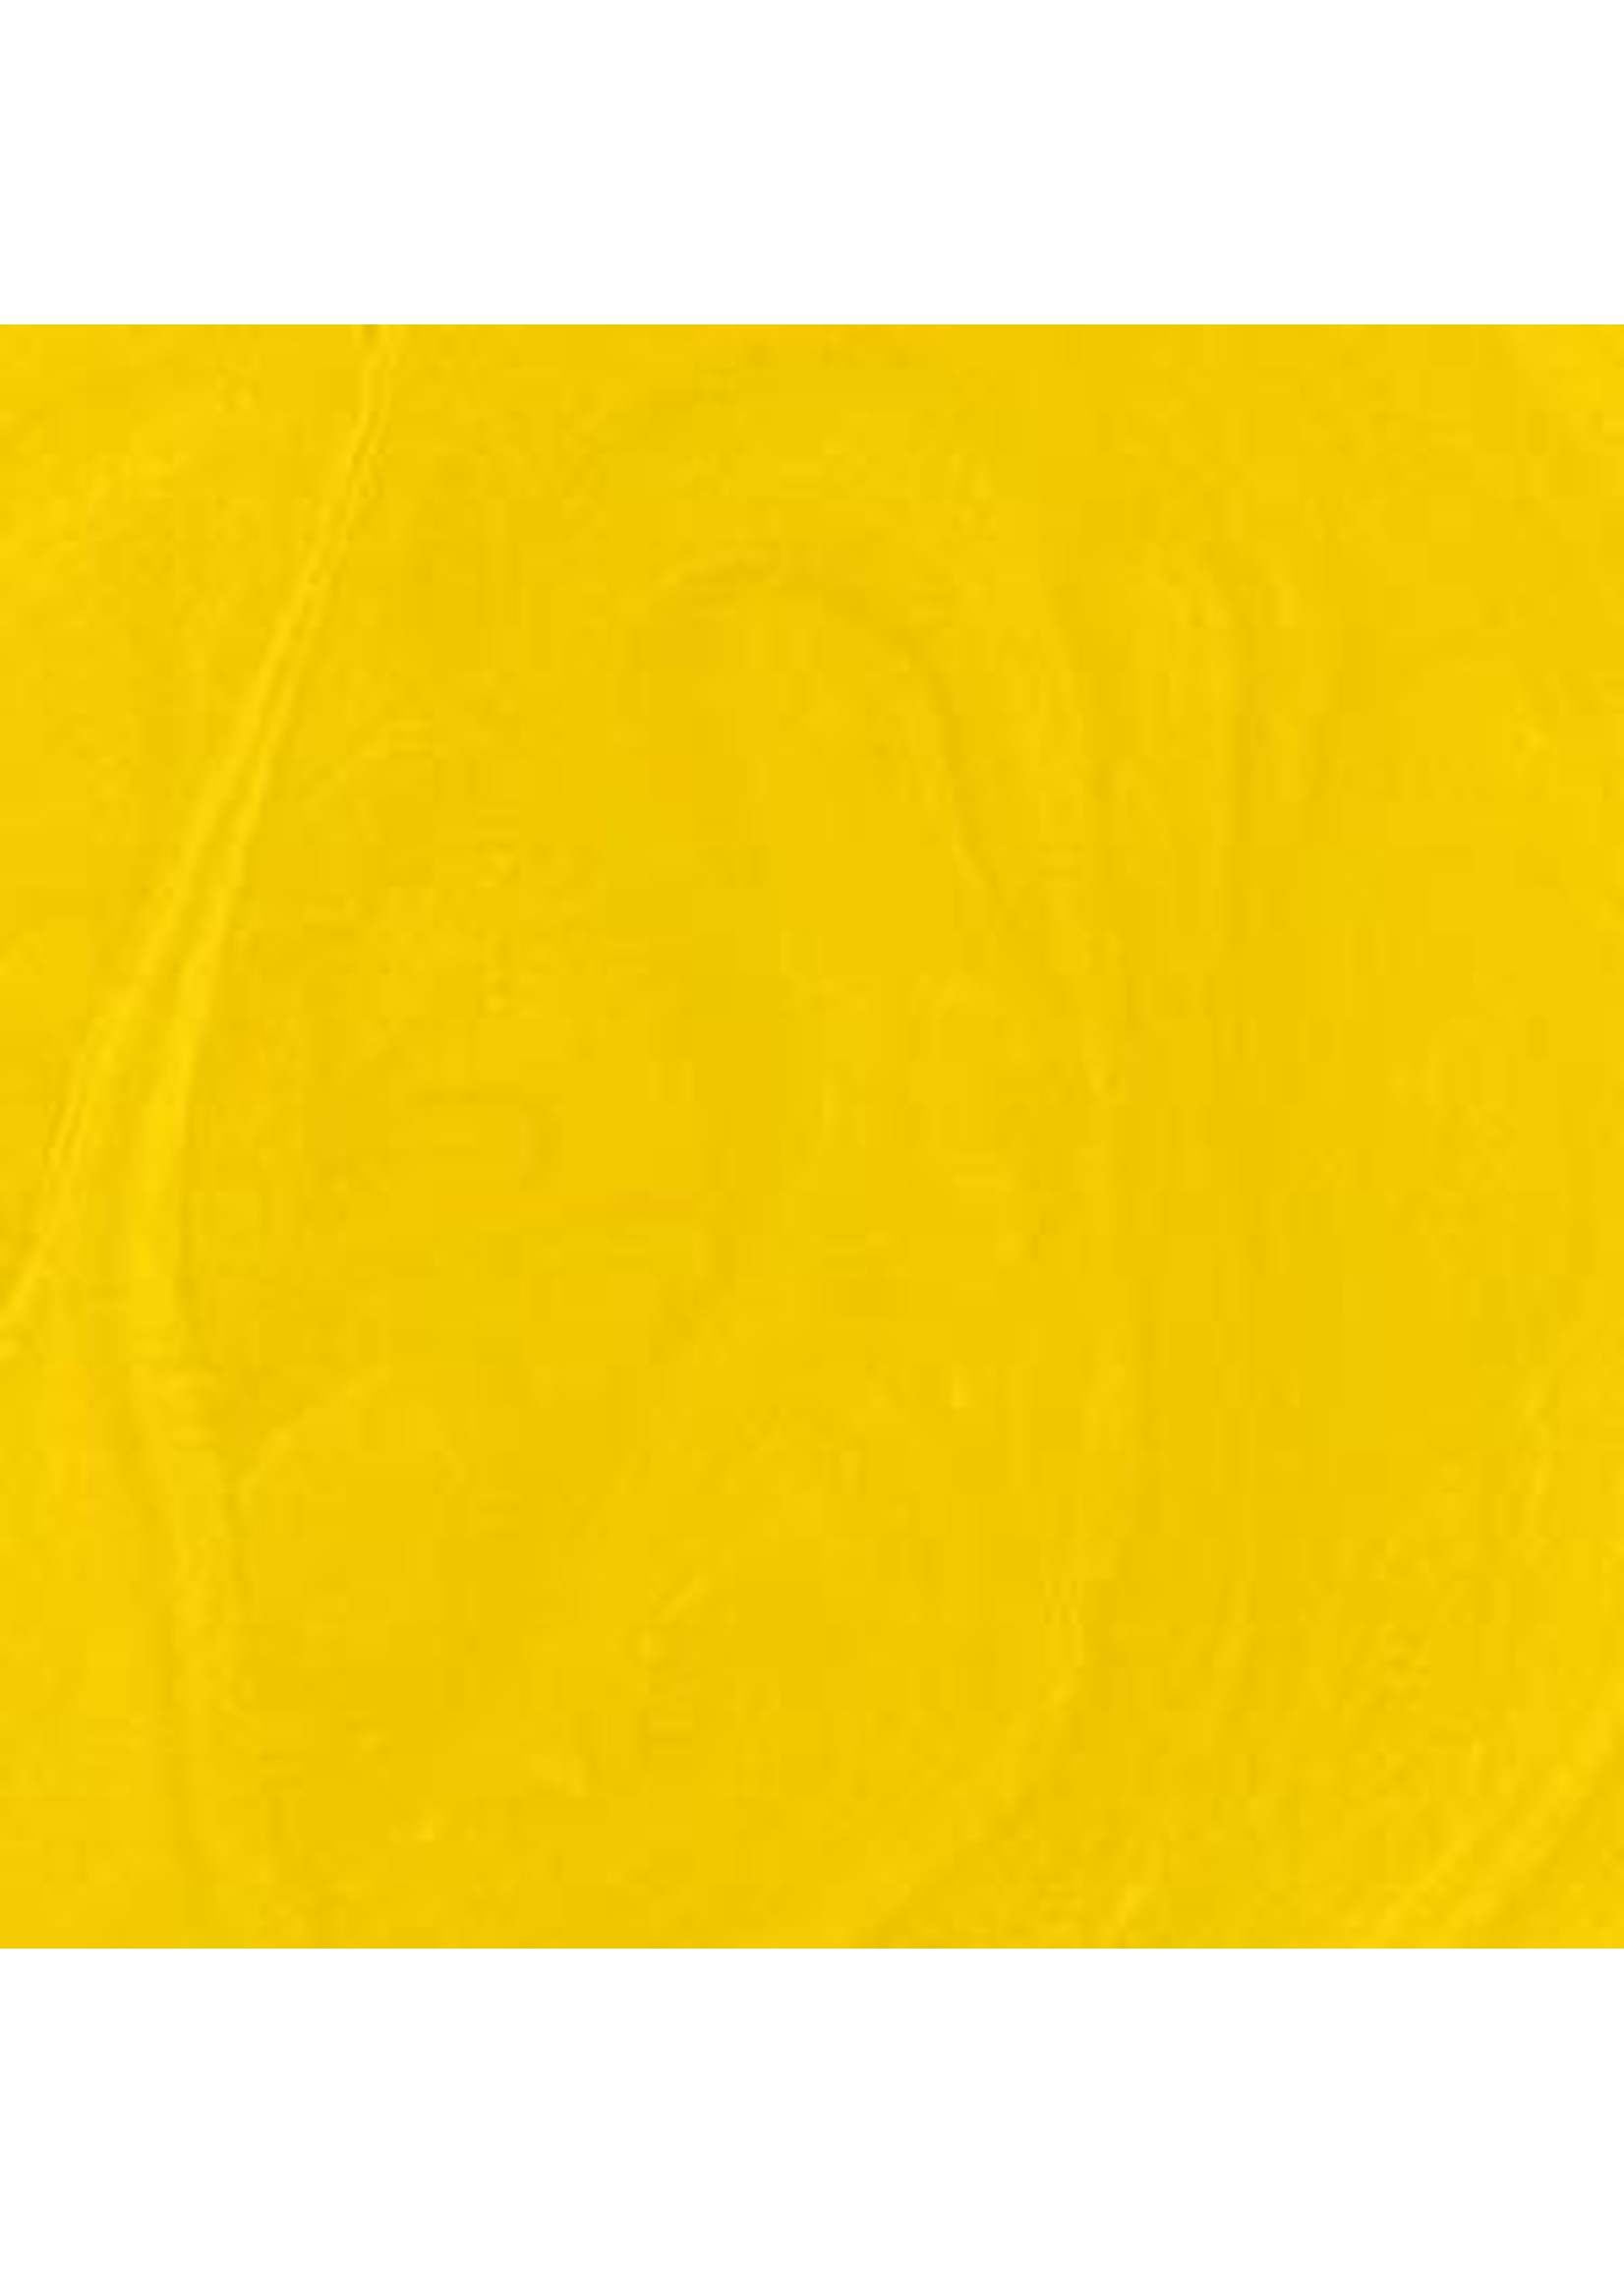 Mission Models MMP-159 - Iridescent Lemon Yellow 1oz